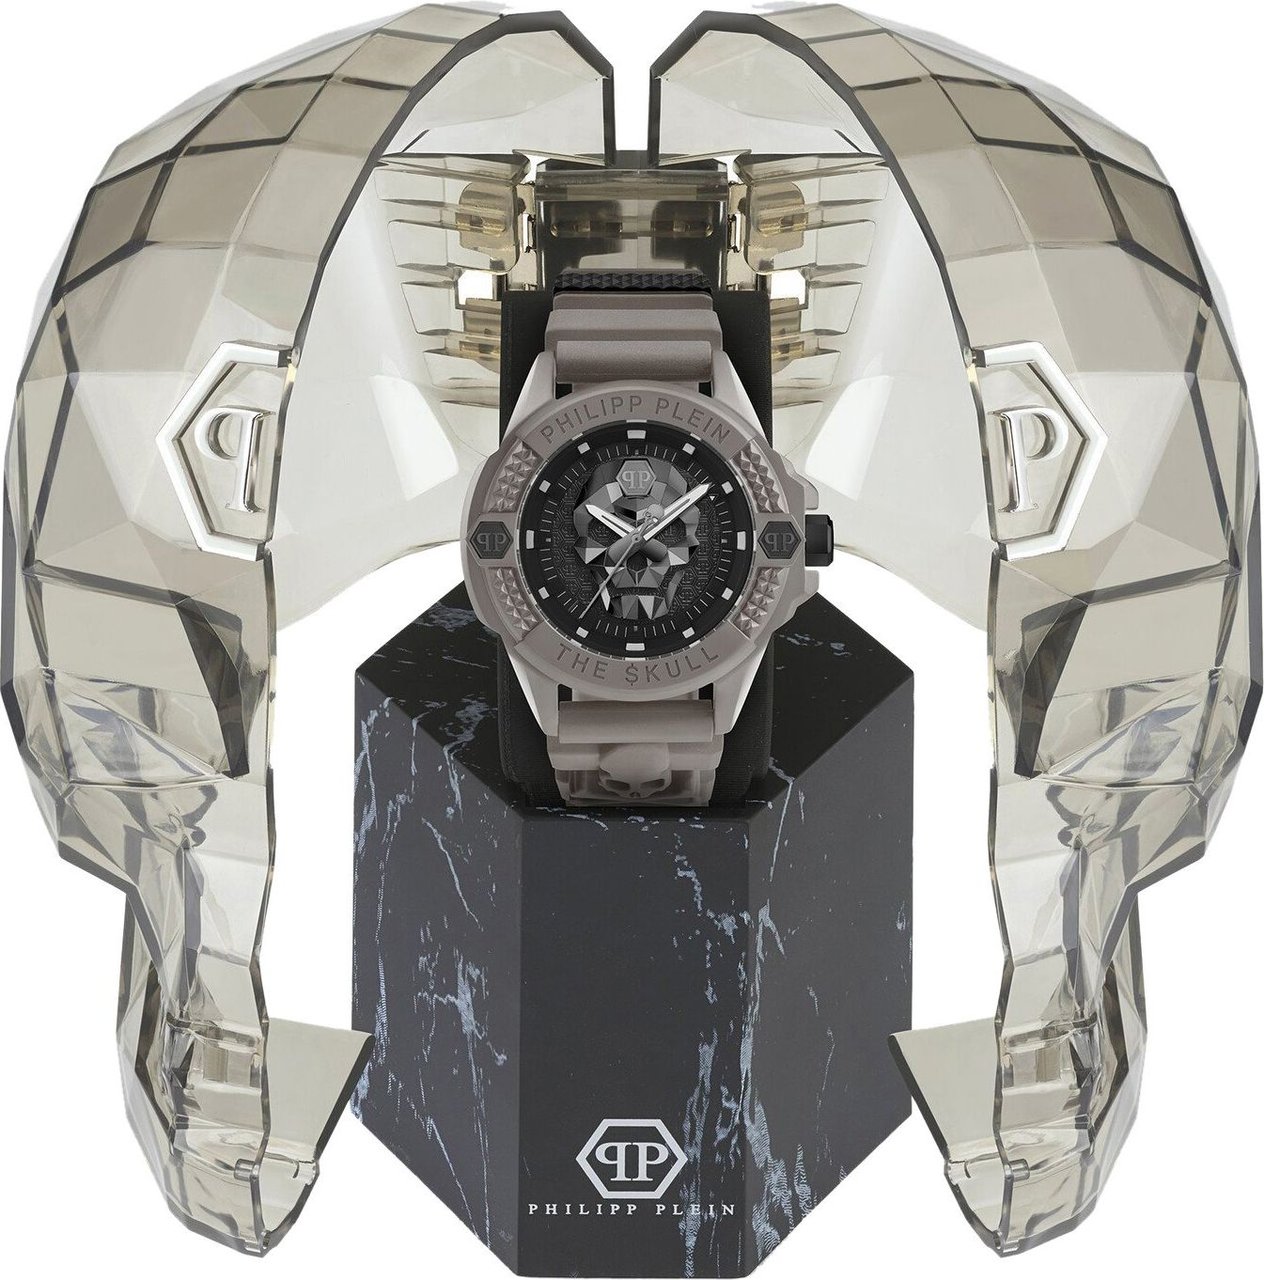 Philipp Plein PWUBA0323 The $kull Ecoceramic horloge Zwart